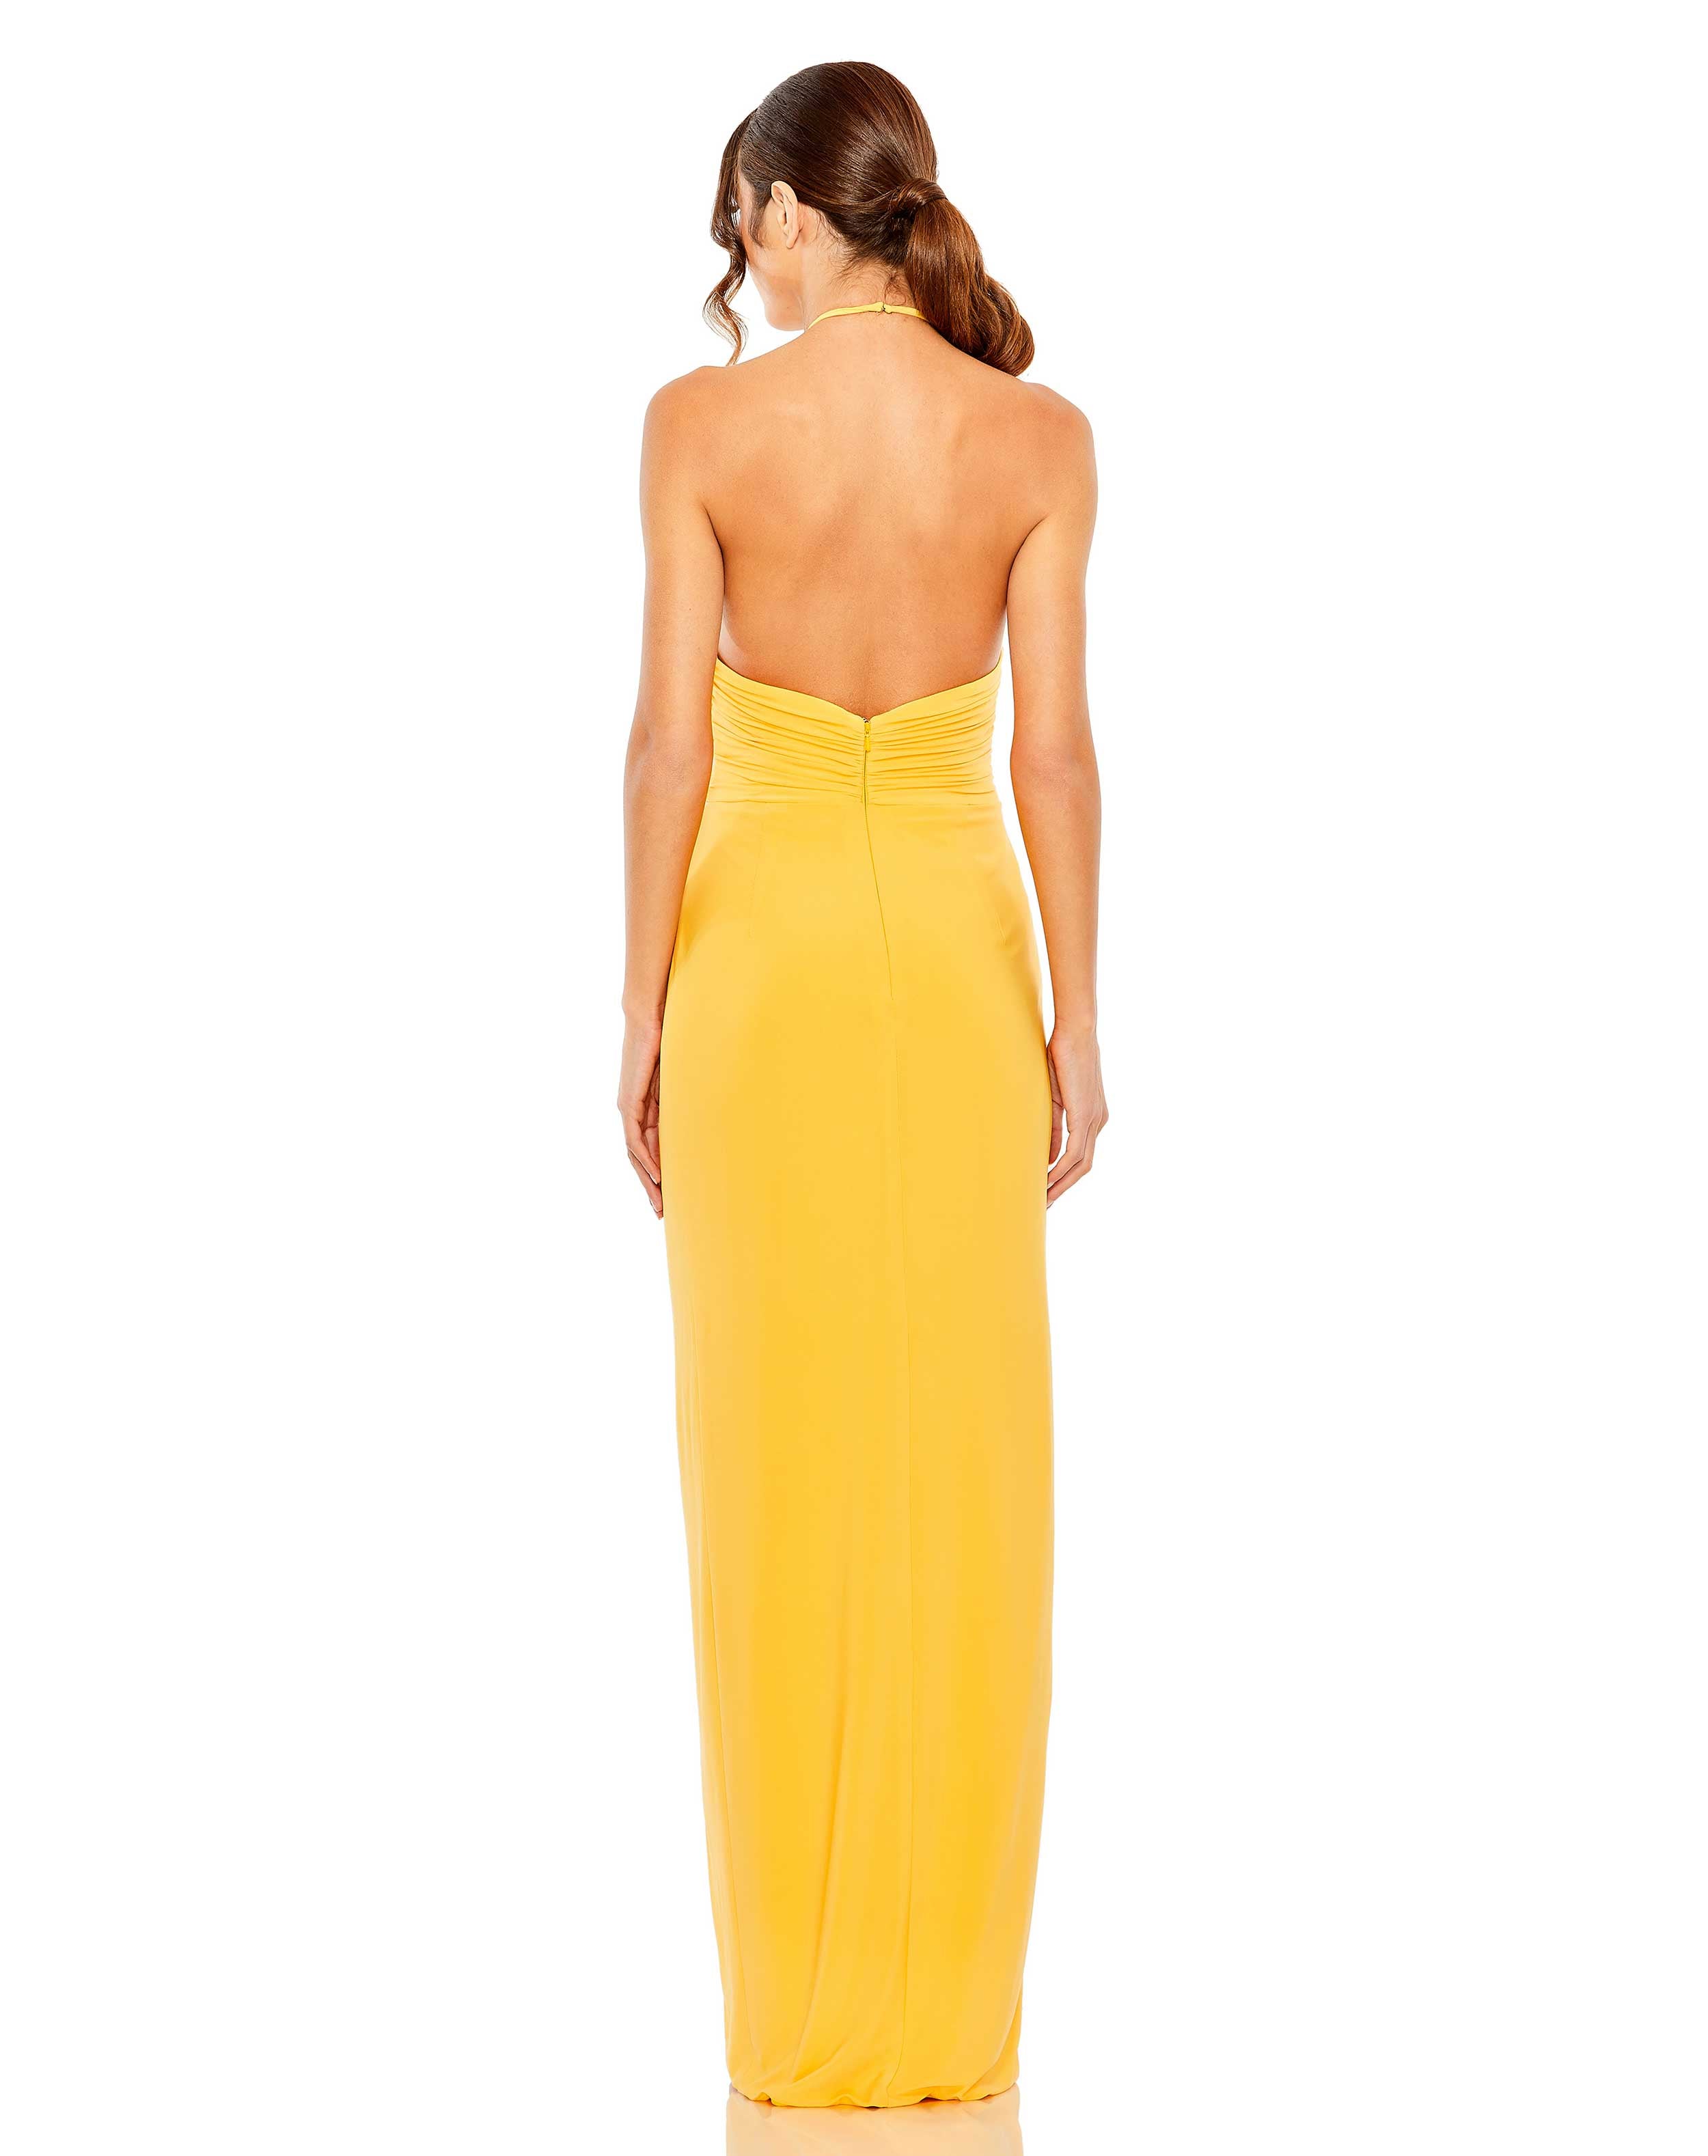 Beaded Halter V Neck Slit Gold Yellow Prom Dress - Xdressy